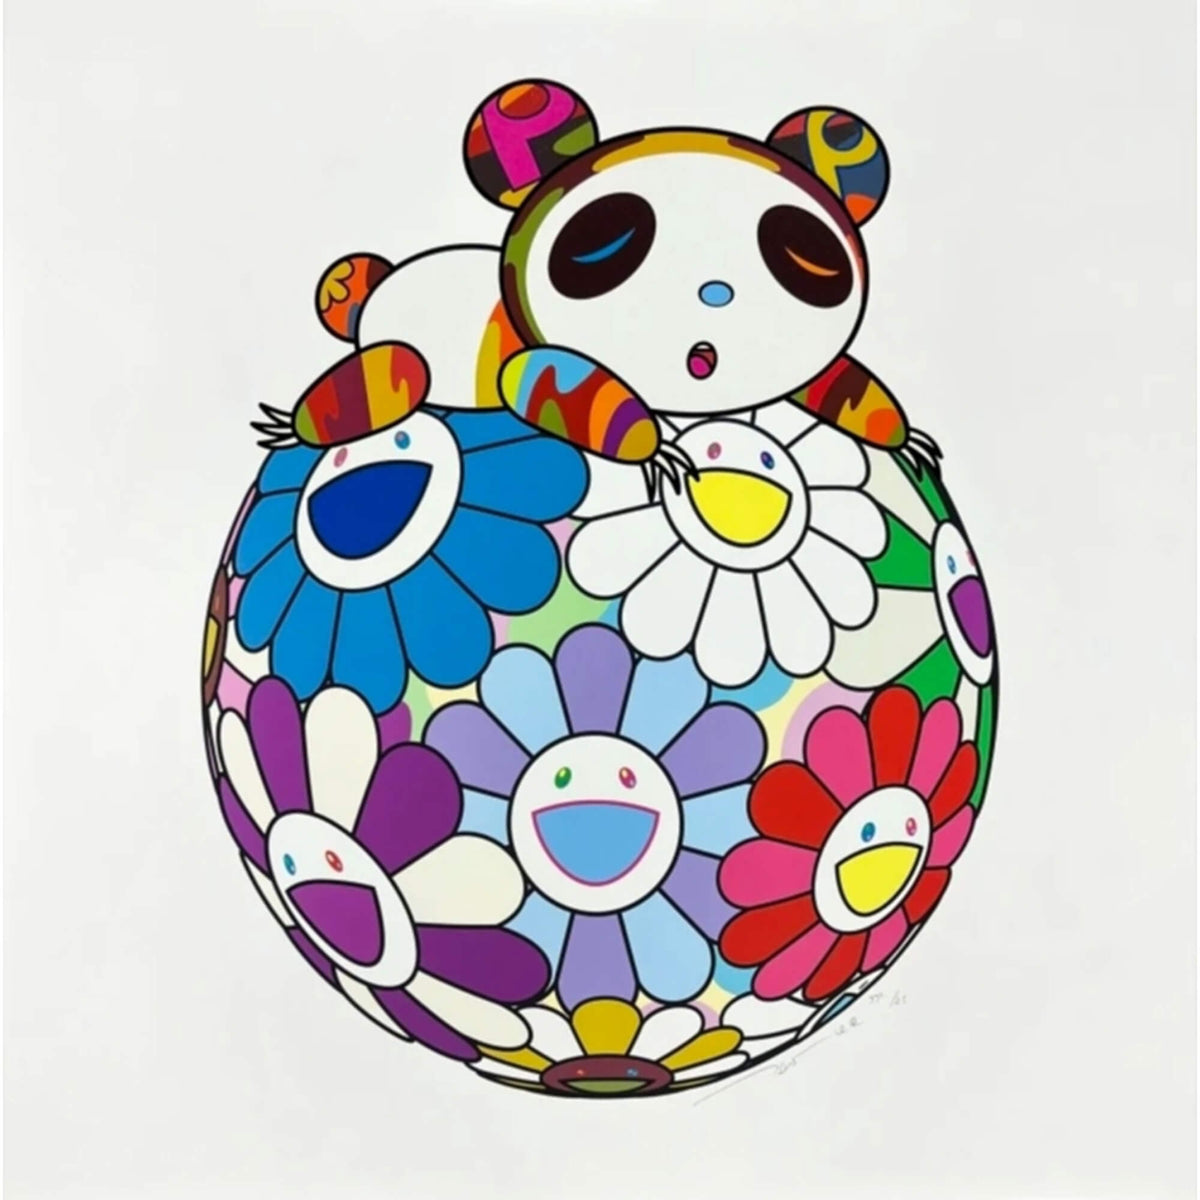 Takashi Murakami - Panda Family - Happiness for Sale